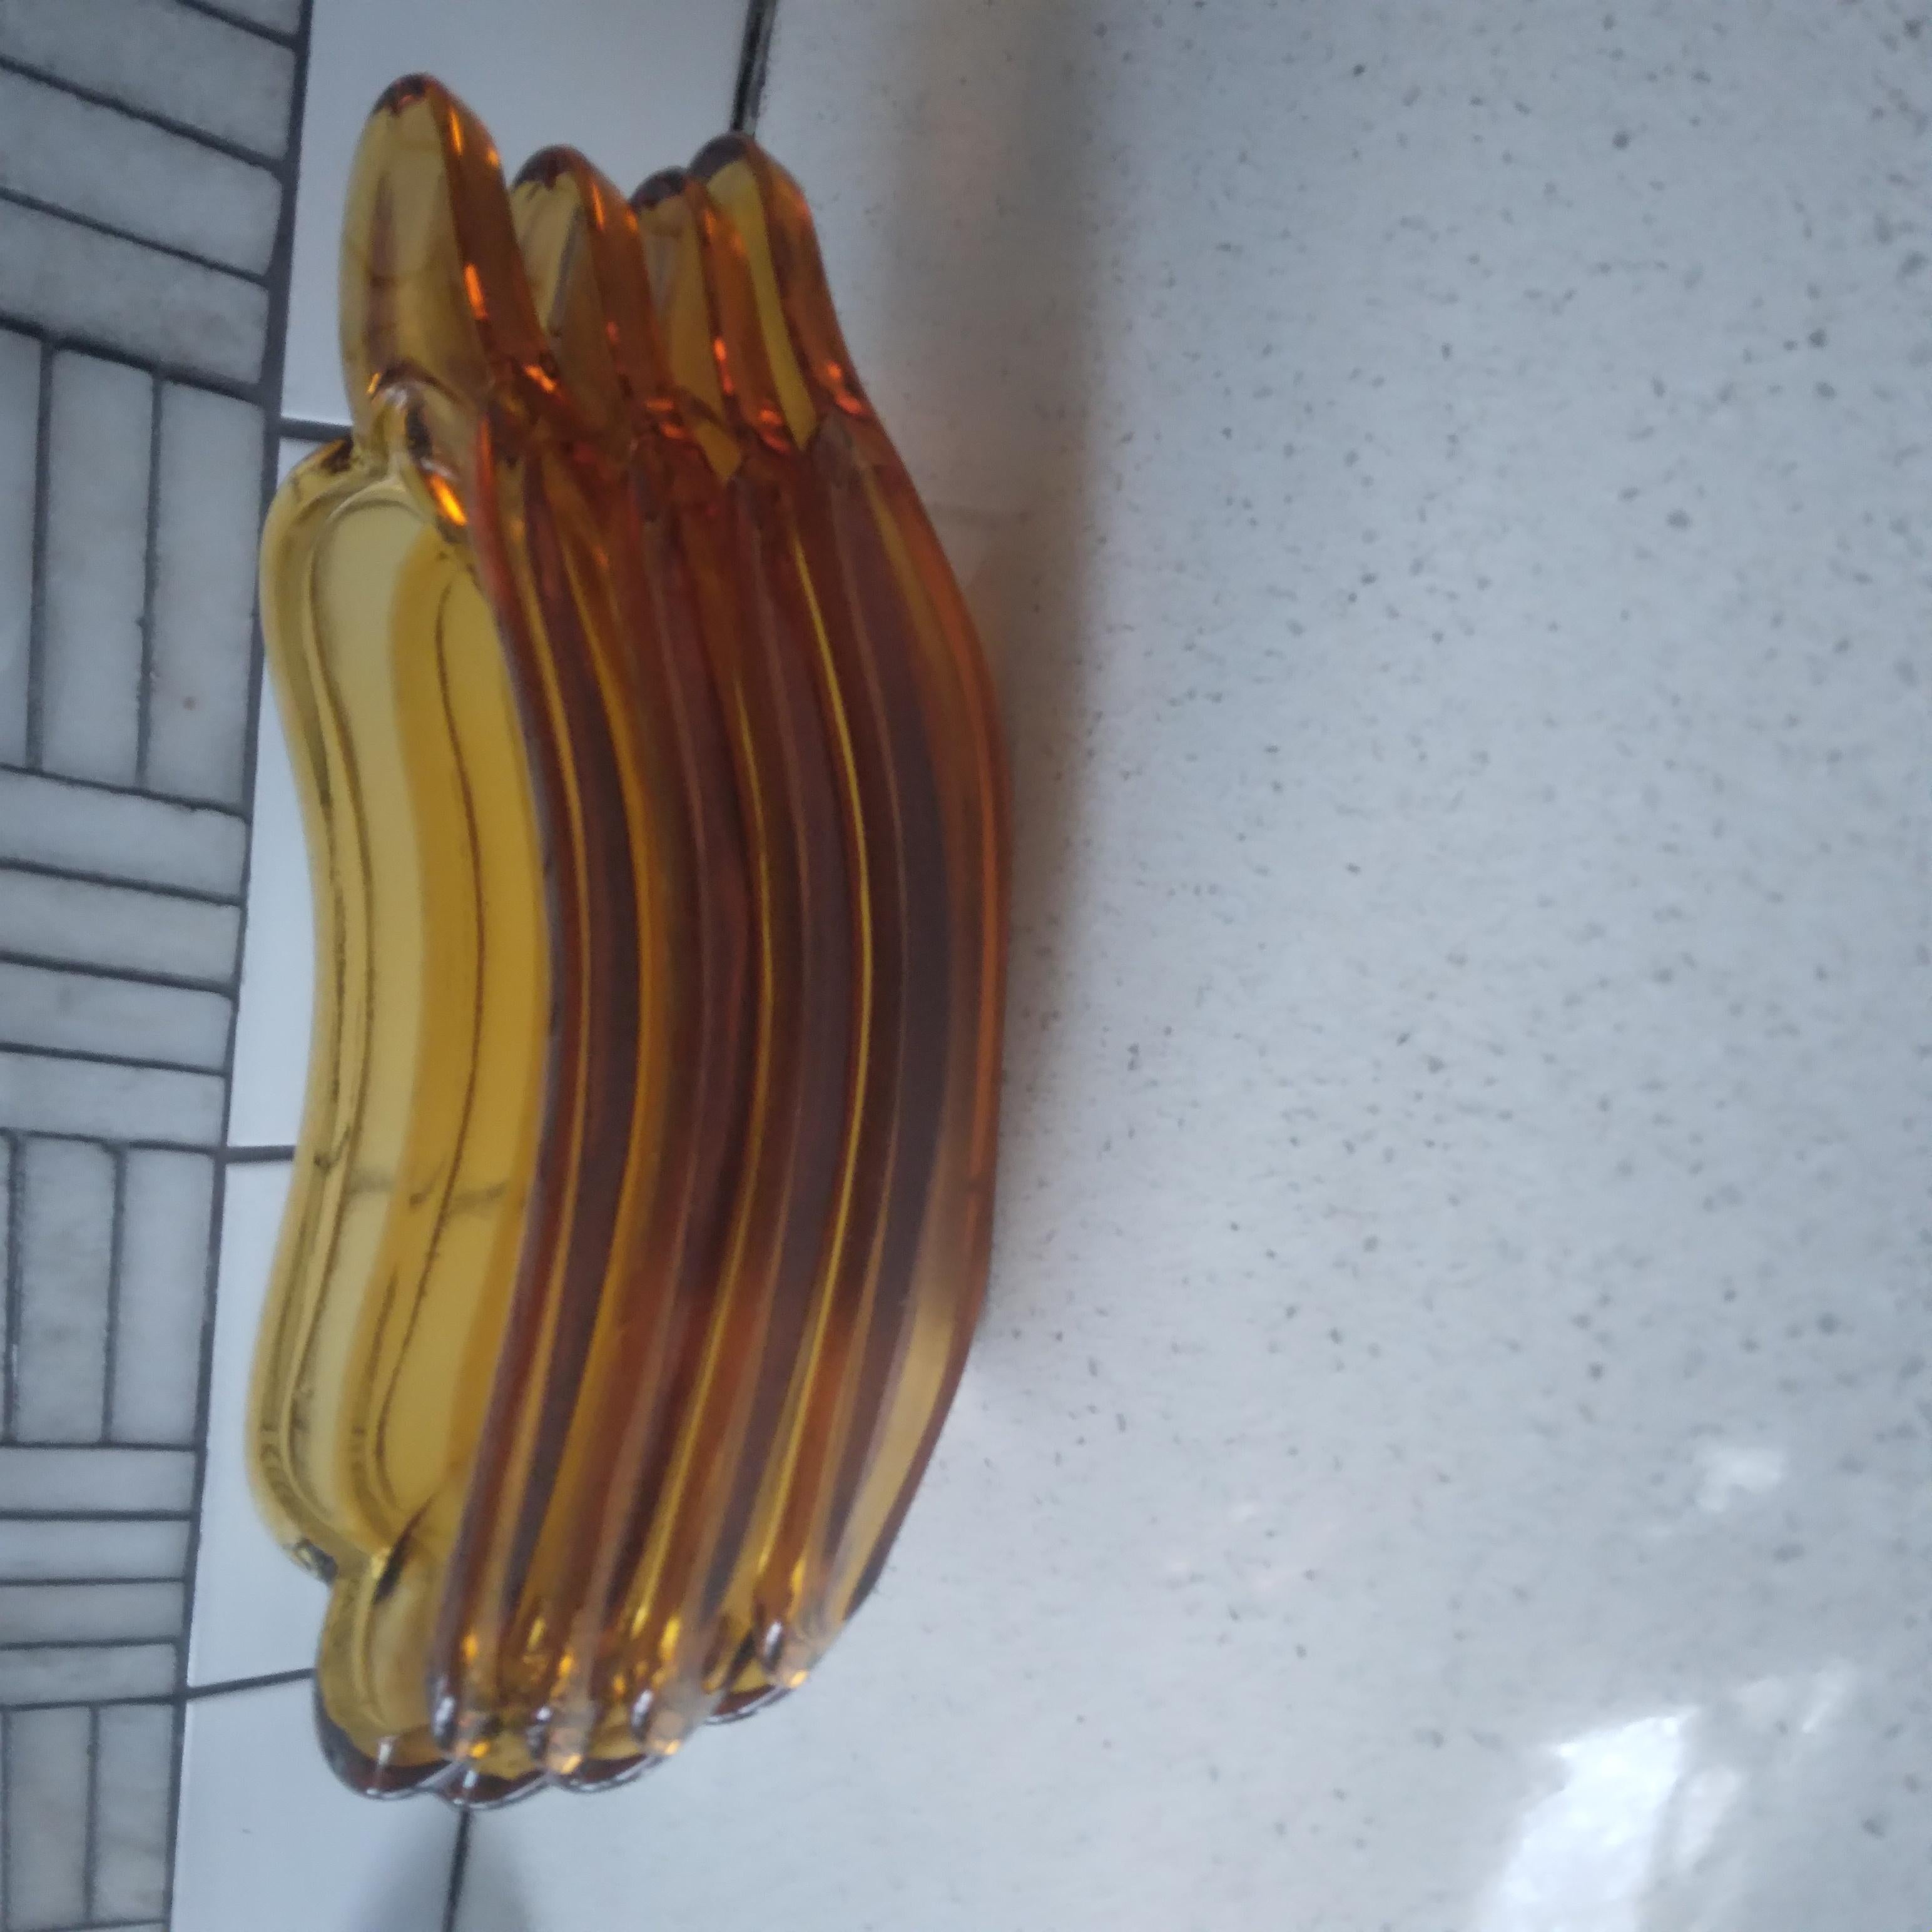 vintage banana split dishes